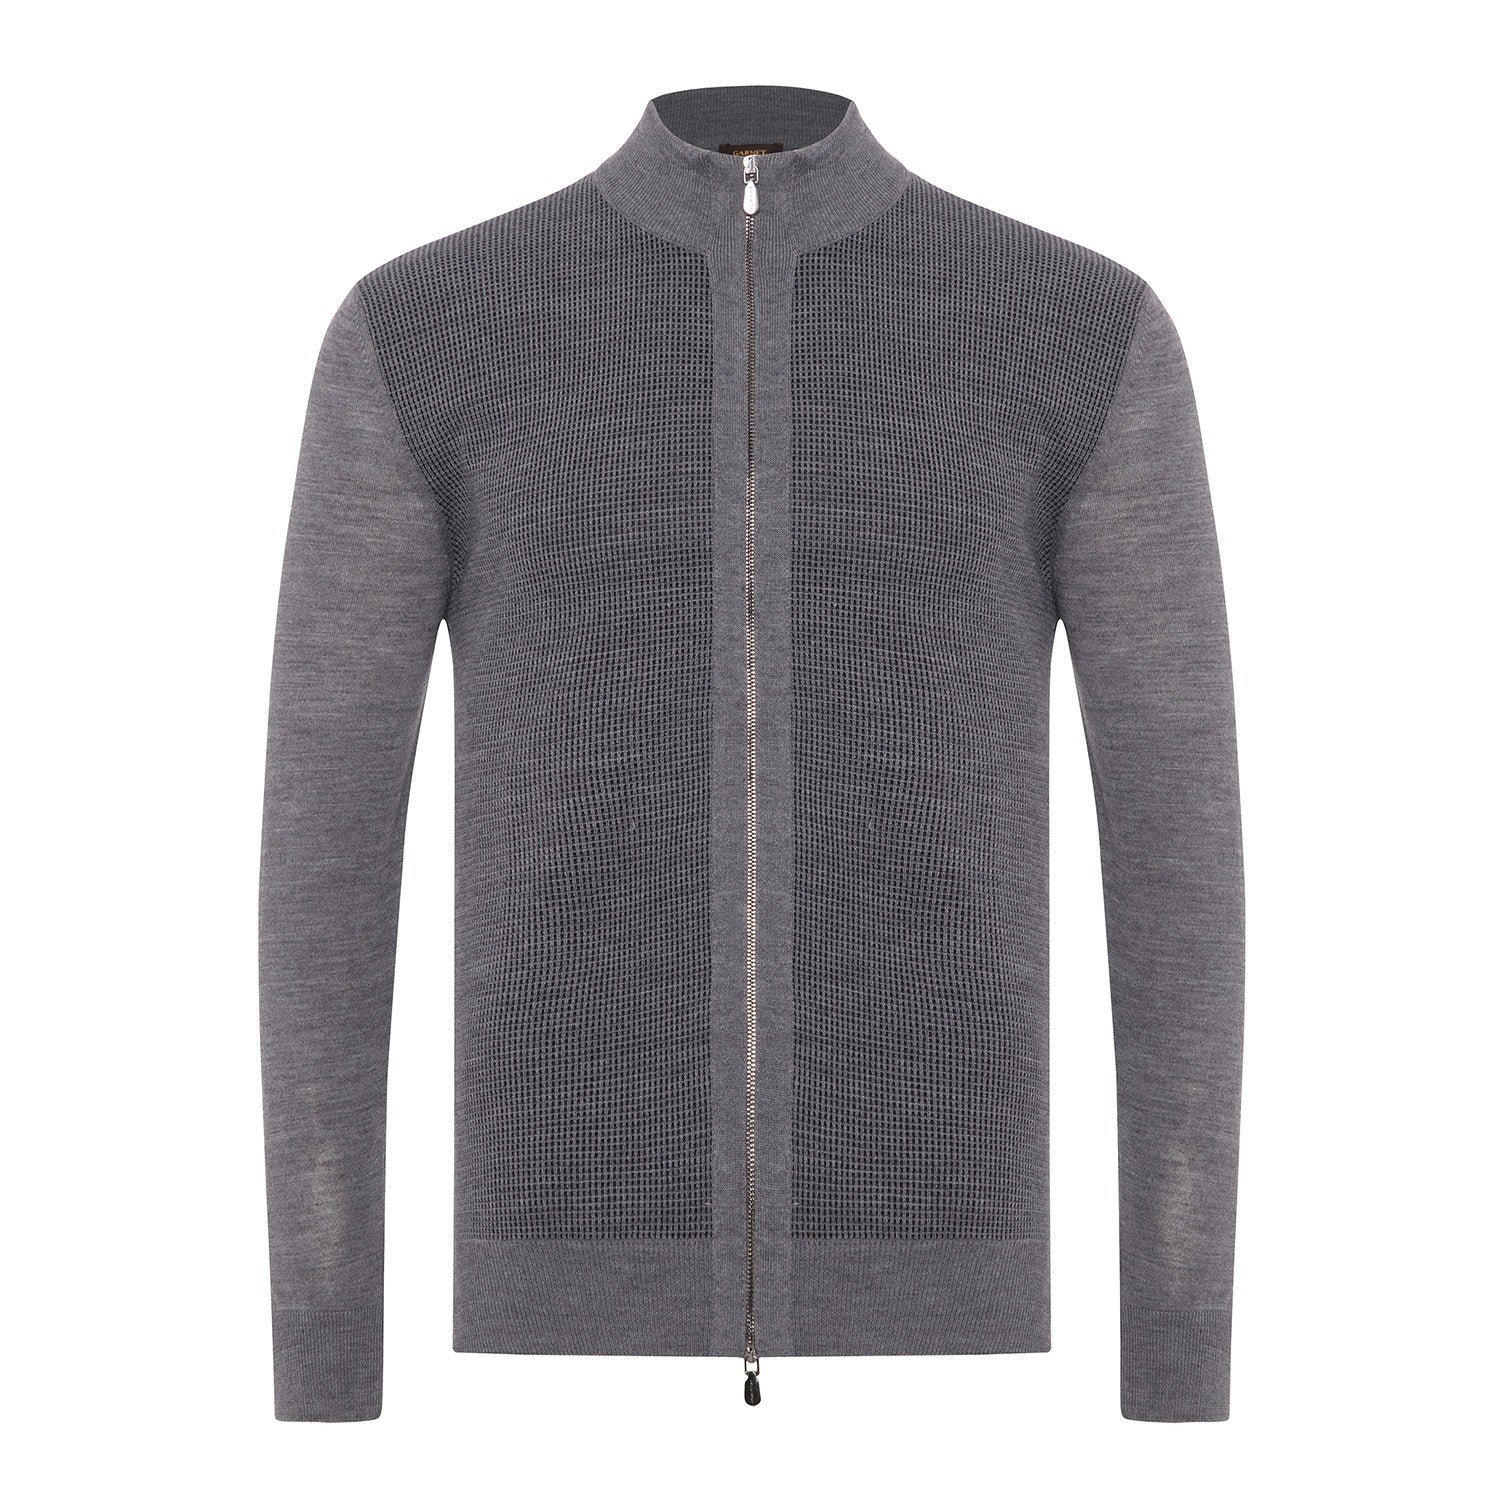 Full Zip Merino Solid Sweater in Gray